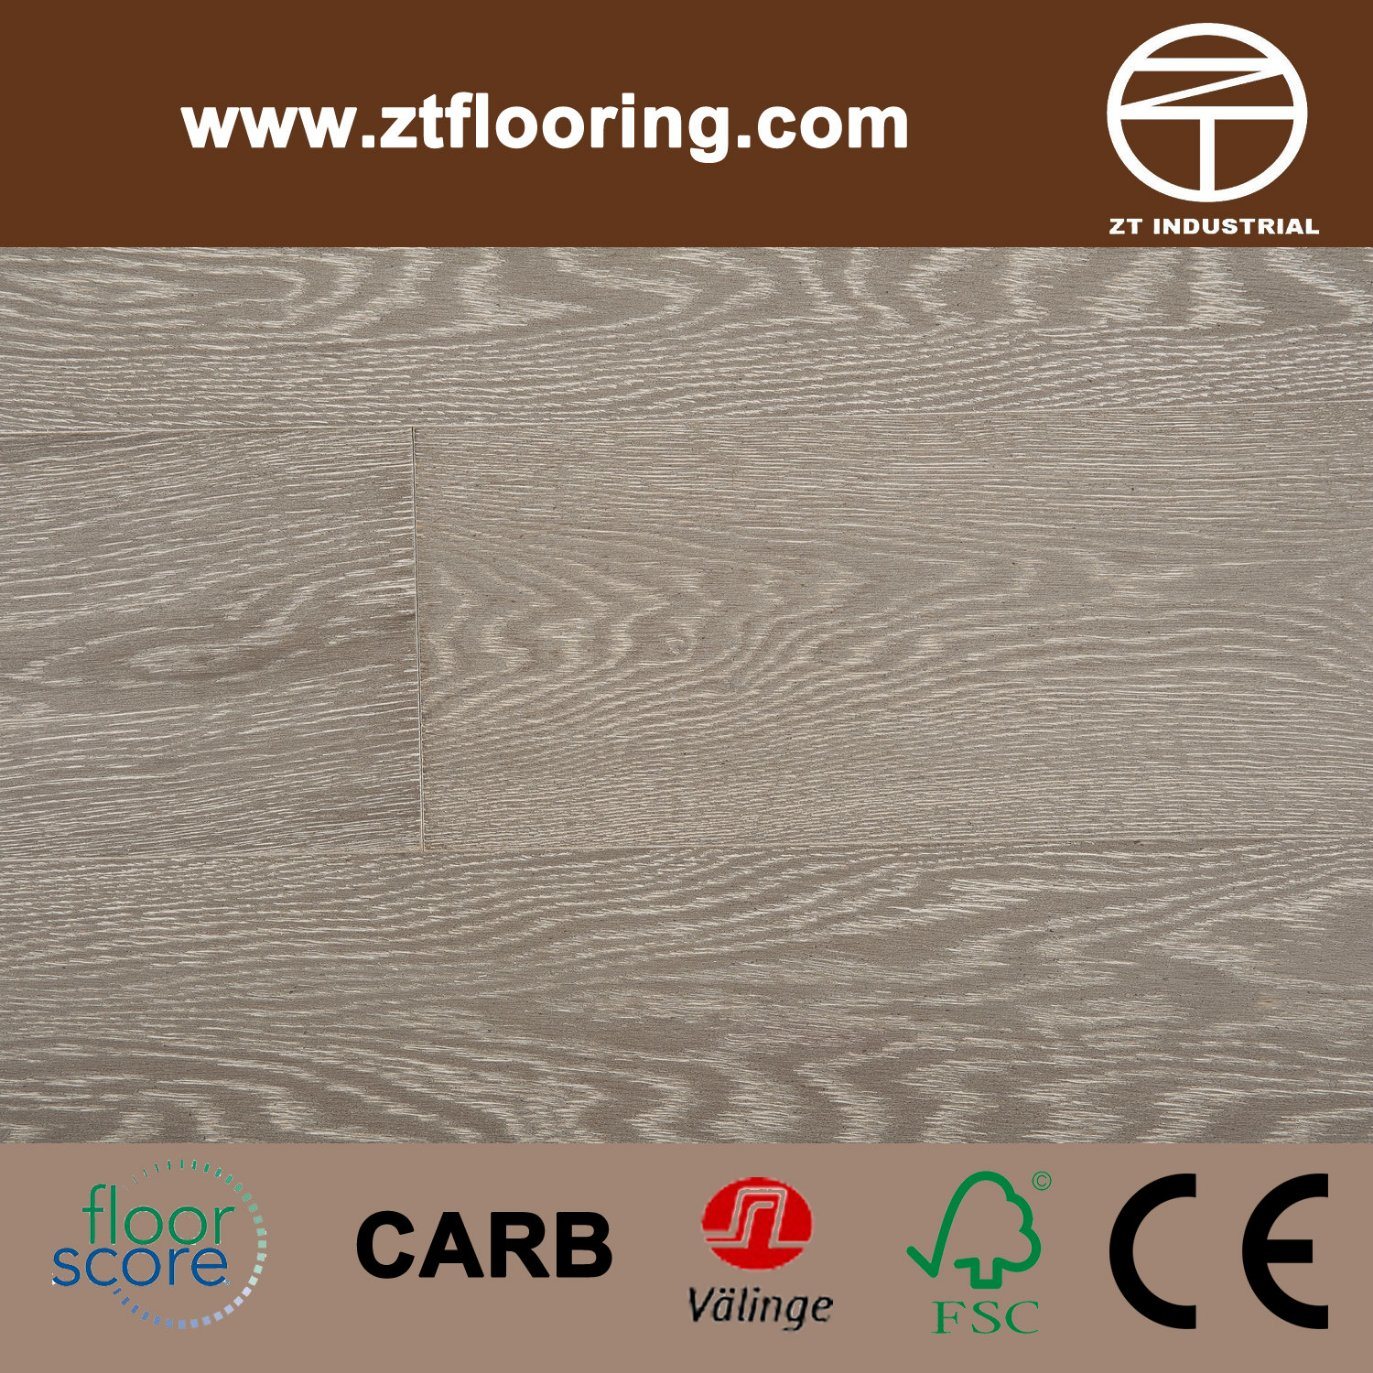 EU Oak Engineered Brushed Wood Flooring Floor Score Standard EU Standard